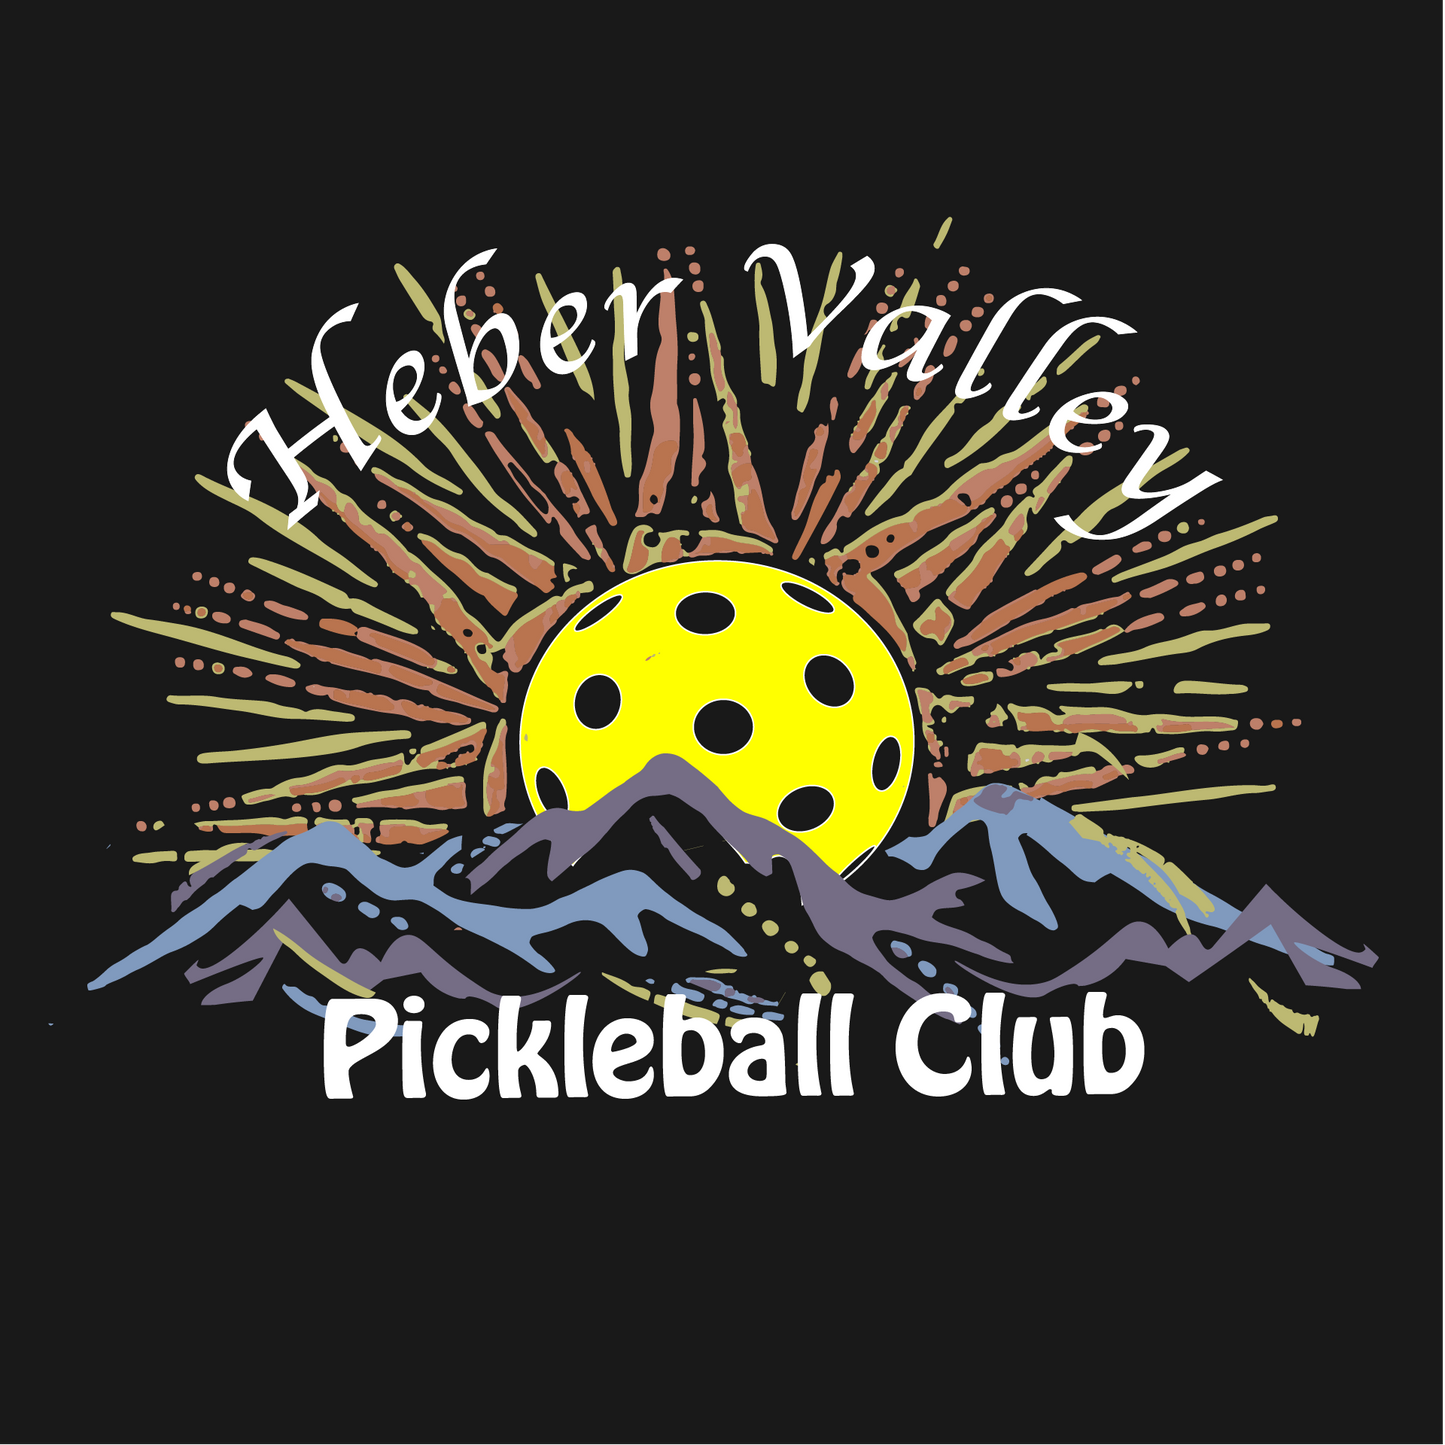 Heber Valley Pickleball Club (Small) | Women's Long Sleeve V-Neck Pickleball Shirts | 100% Polyester